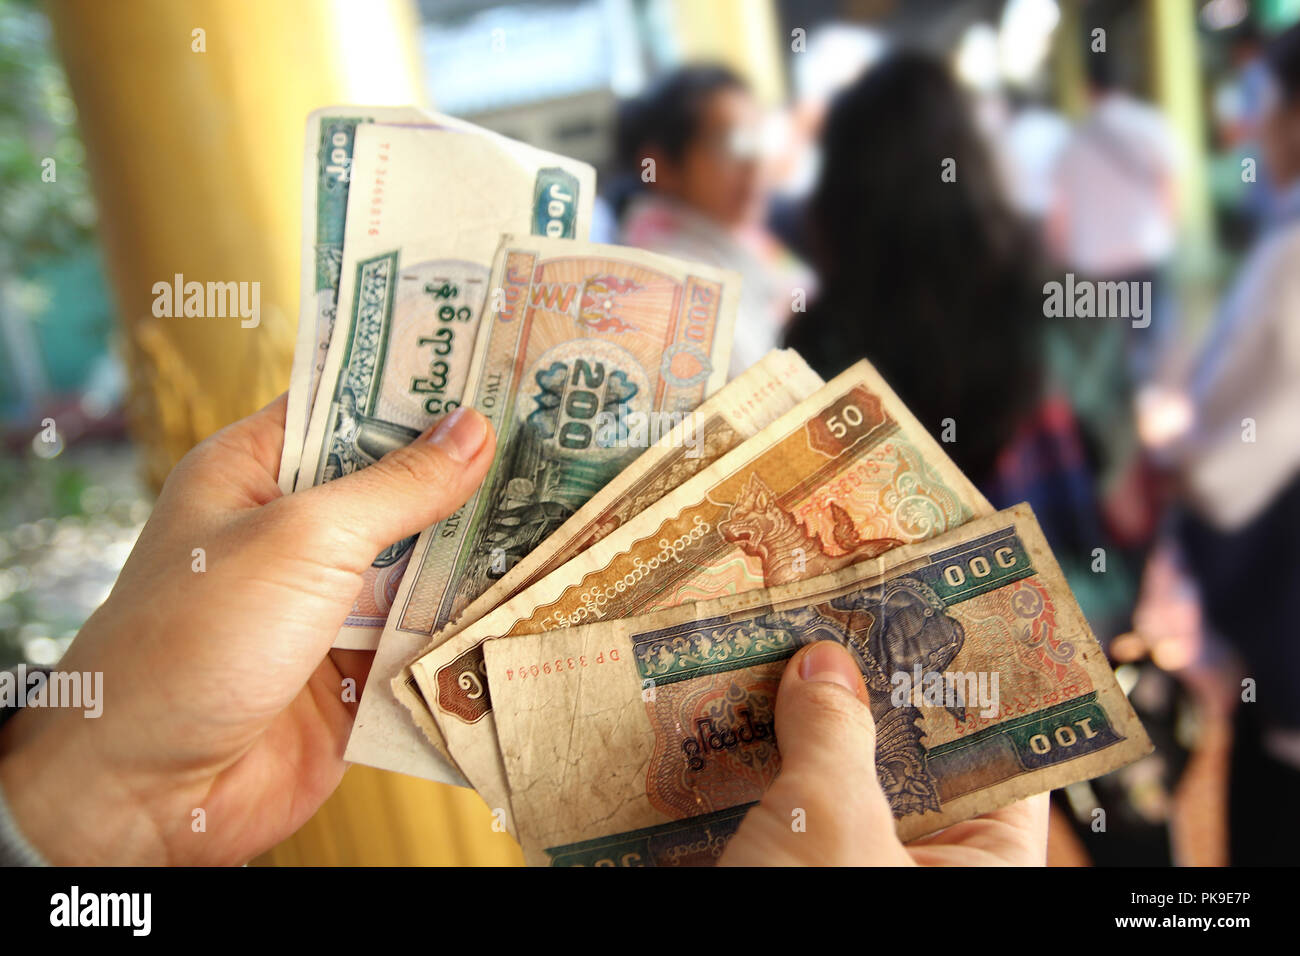 Myanmar banknotes (MM, MMR ,Kyat)  were unfolded in hand Stock Photo